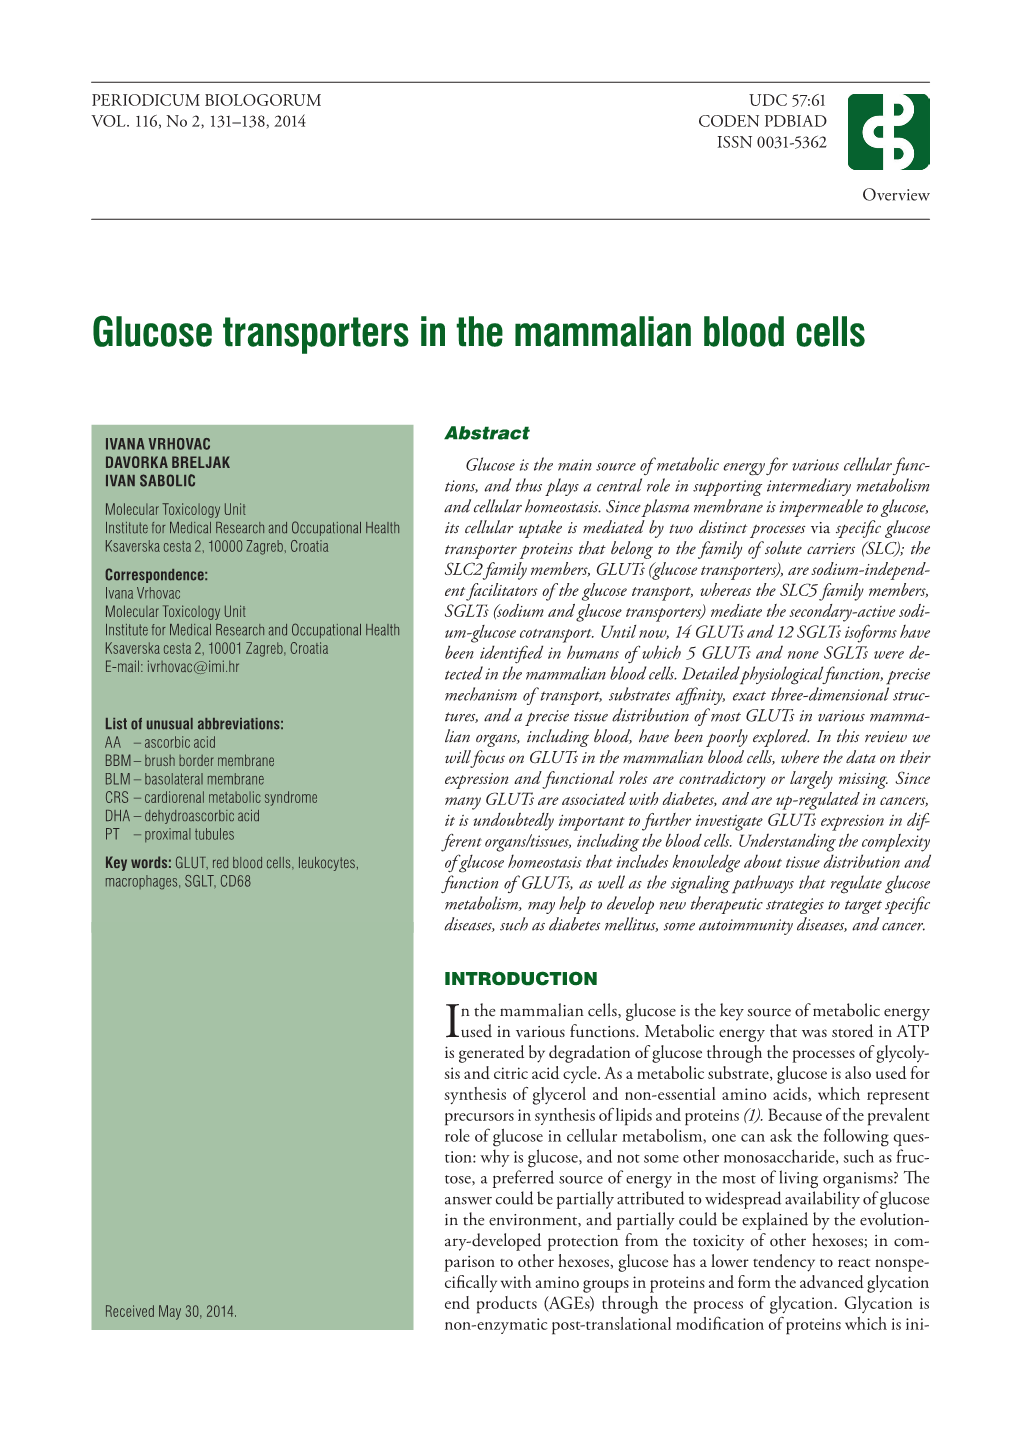 Glucose Transporters in the Mammalian Blood Cells